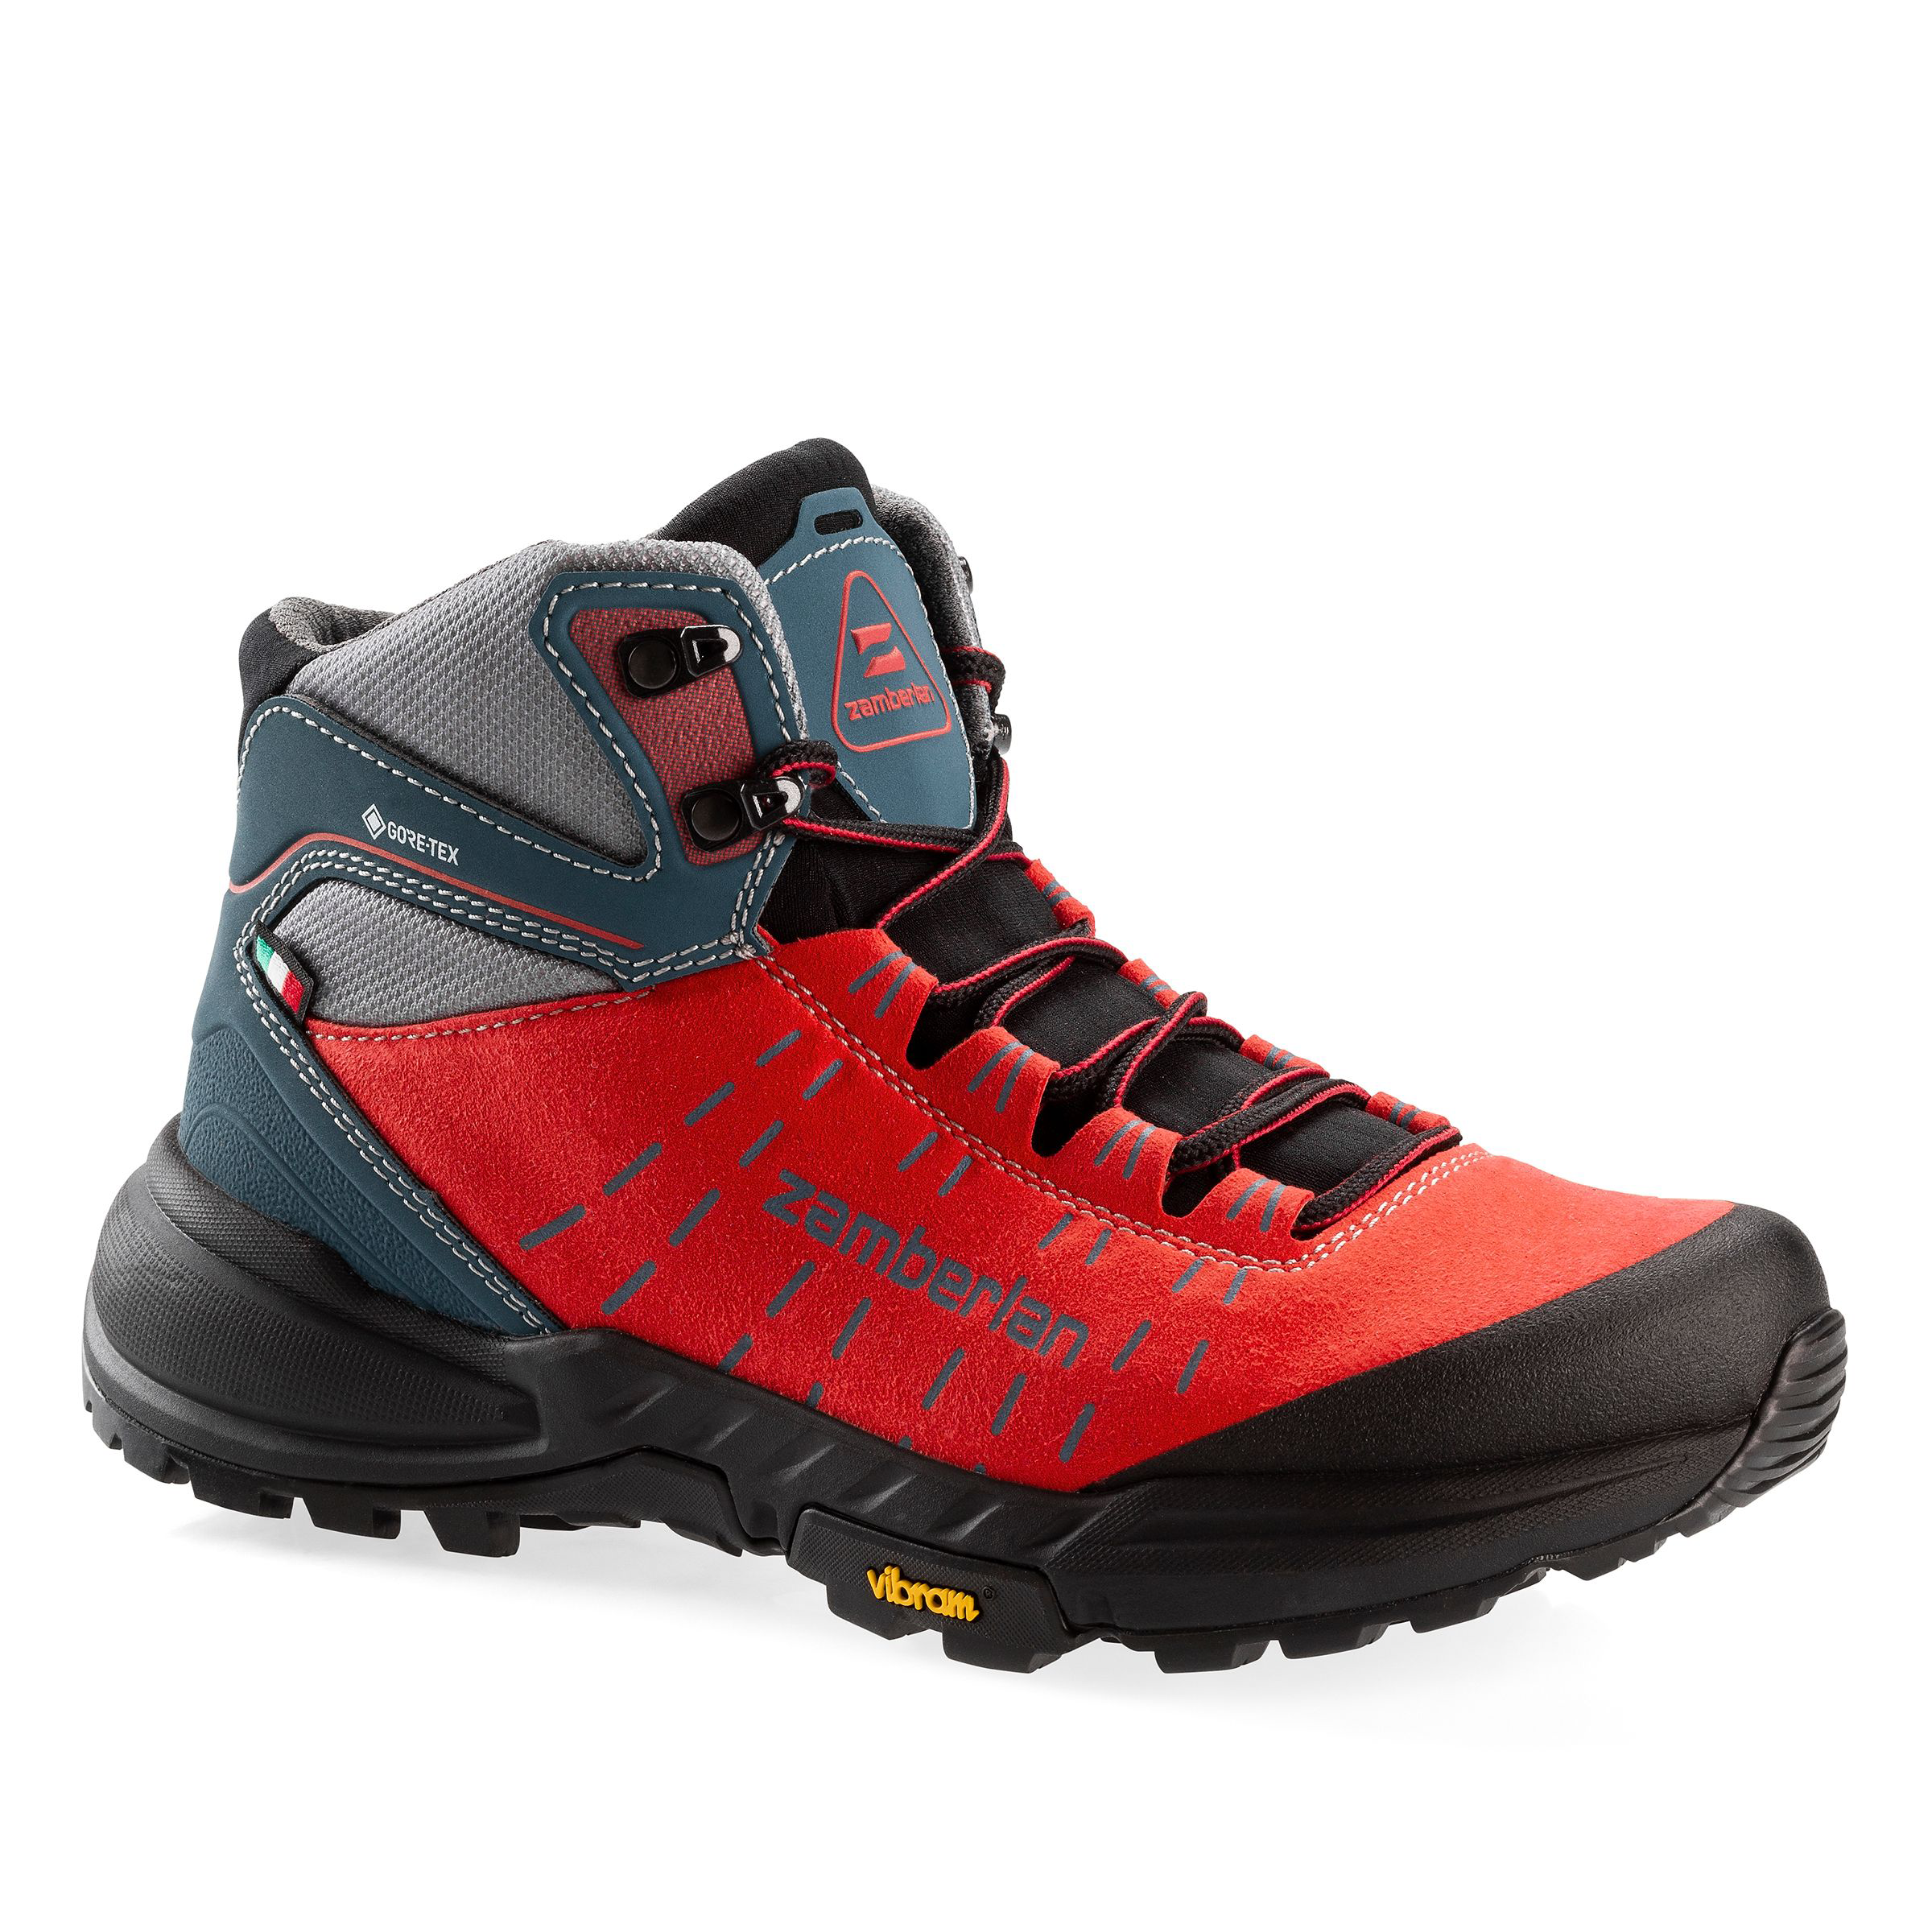 Zamberlan 334 Circe GTX Waterproof Hiking Boots for Ladies - Red - 6M